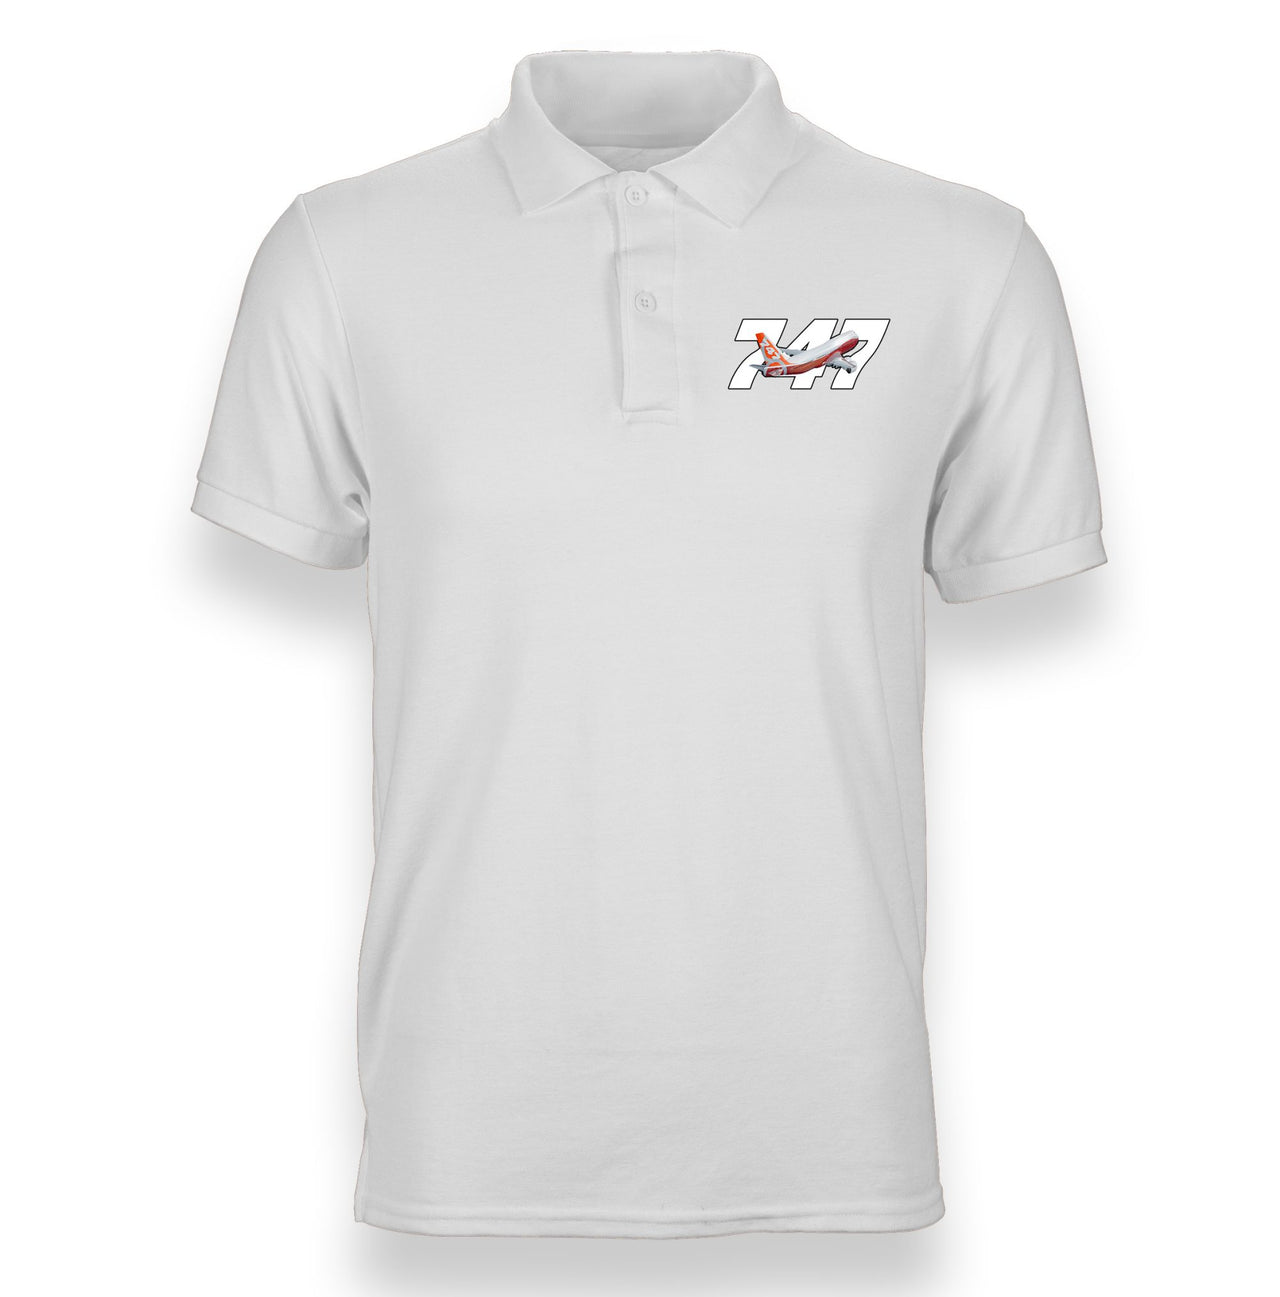 Super Boeing 747 Intercontinental Designed "WOMEN" Polo T-Shirts